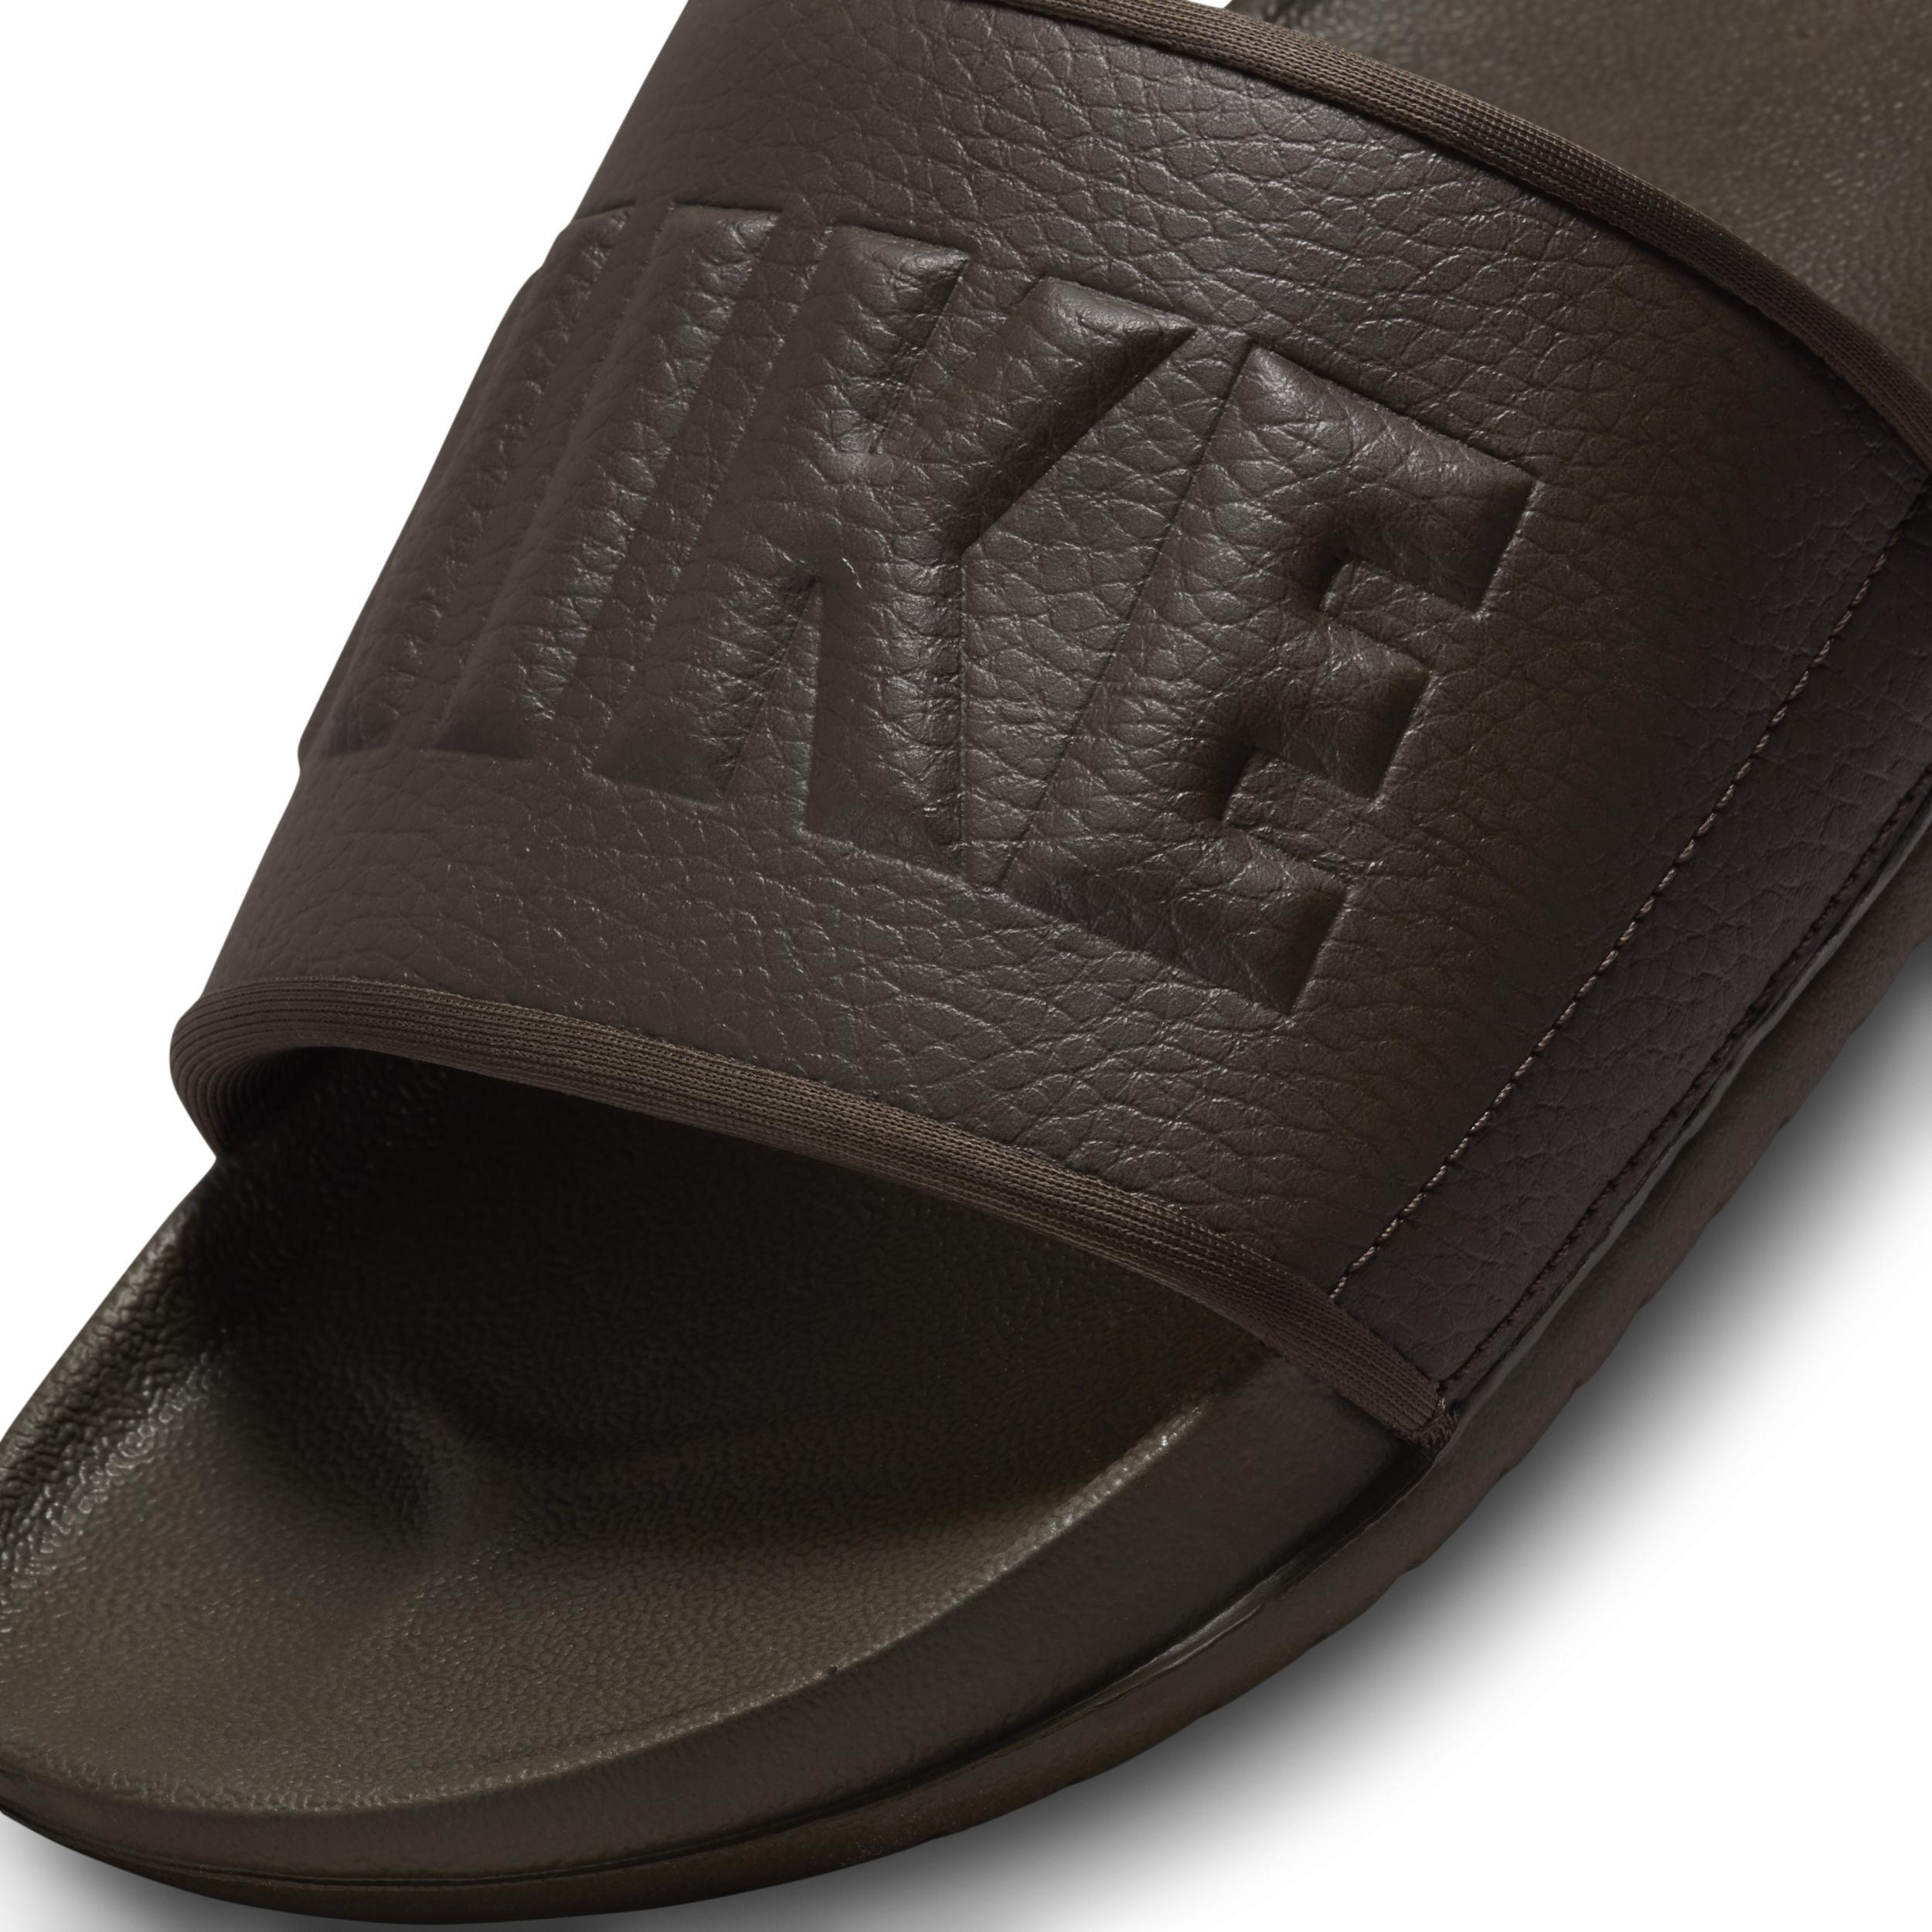 Nike Mens Offcourt Slide Sandals Product Image